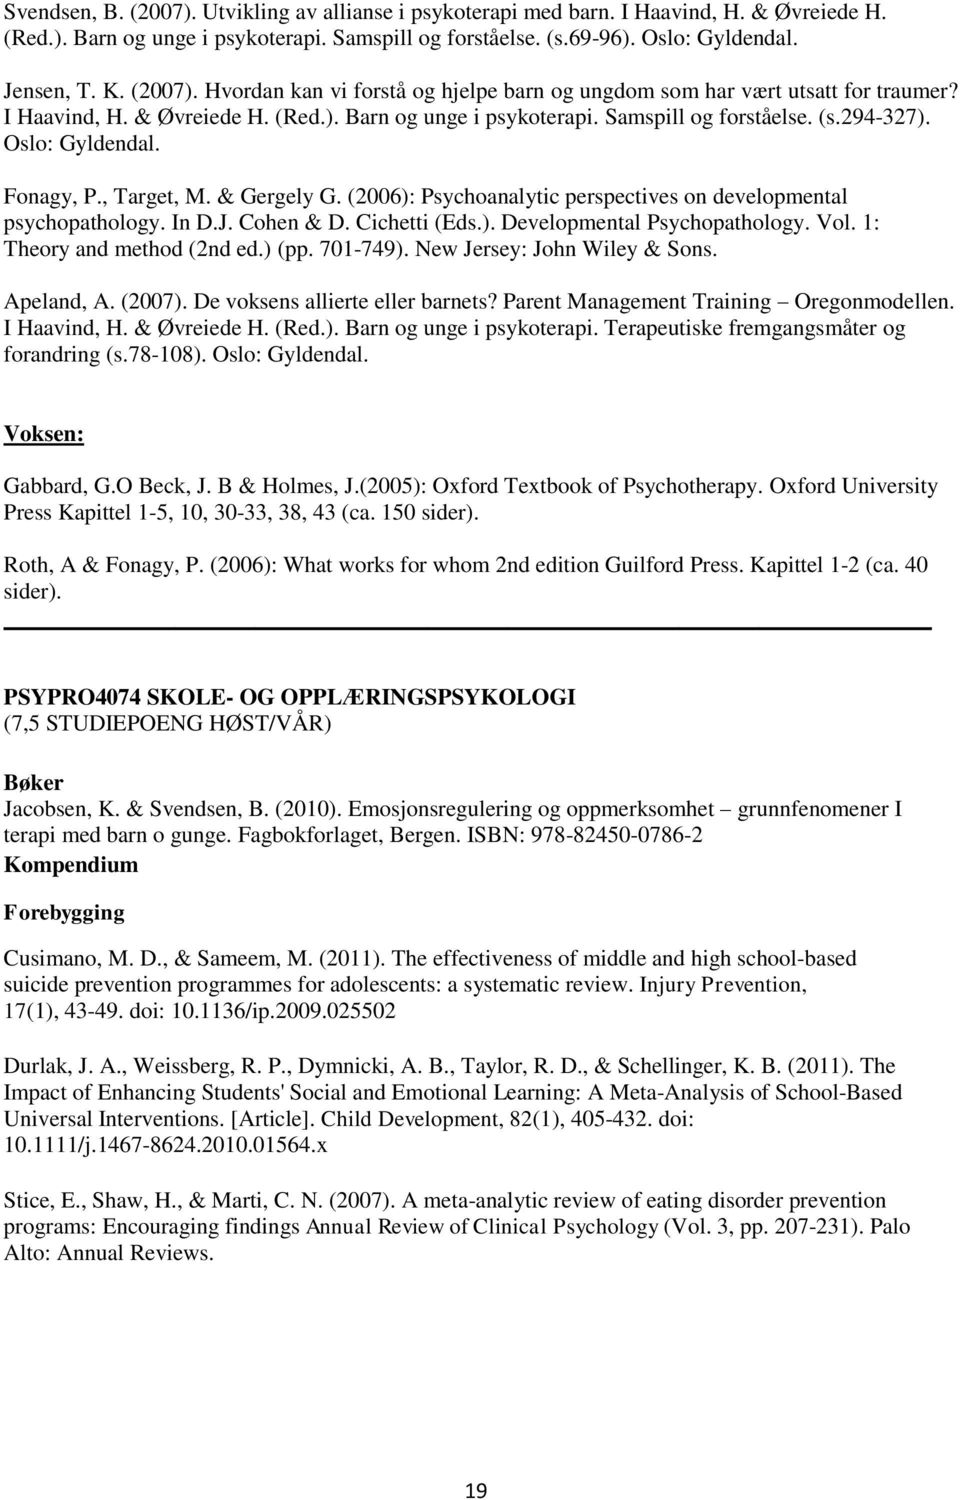 Oslo: Gyldendal. Fonagy, P., Target, M. & Gergely G. (2006): Psychoanalytic perspectives on developmental psychopathology. In D.J. Cohen & D. Cichetti (Eds.). Developmental Psychopathology. Vol.